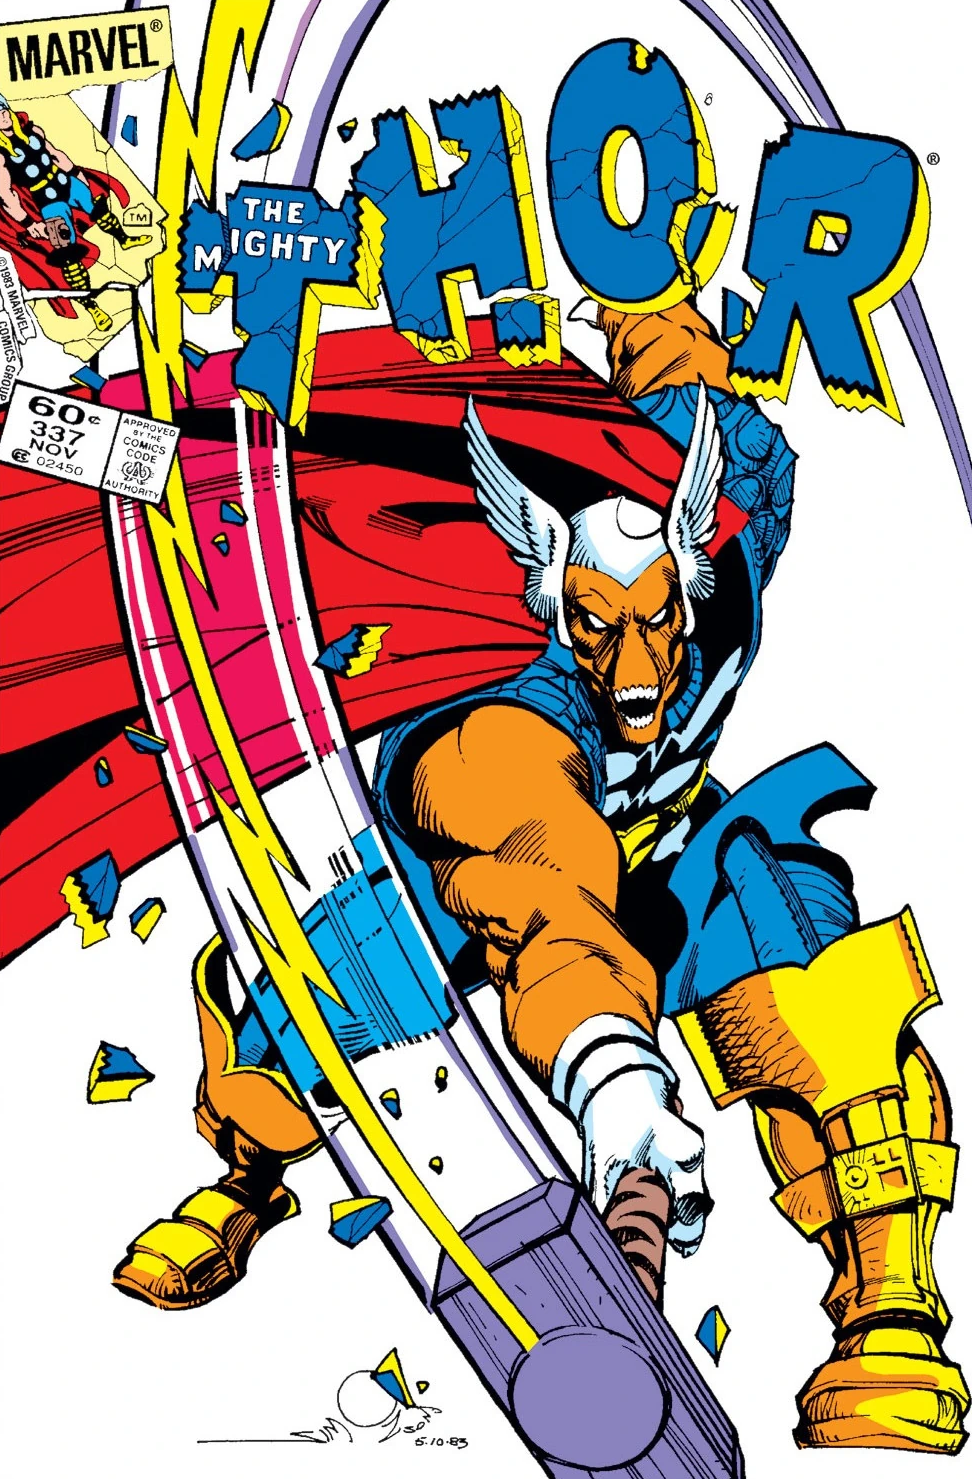 Beta Ray Bill finds himself worthy of Mjolnir on Walter Simonson's cover to Thor Vol. 1 #337 "Doom" (1983), Marvel Comics